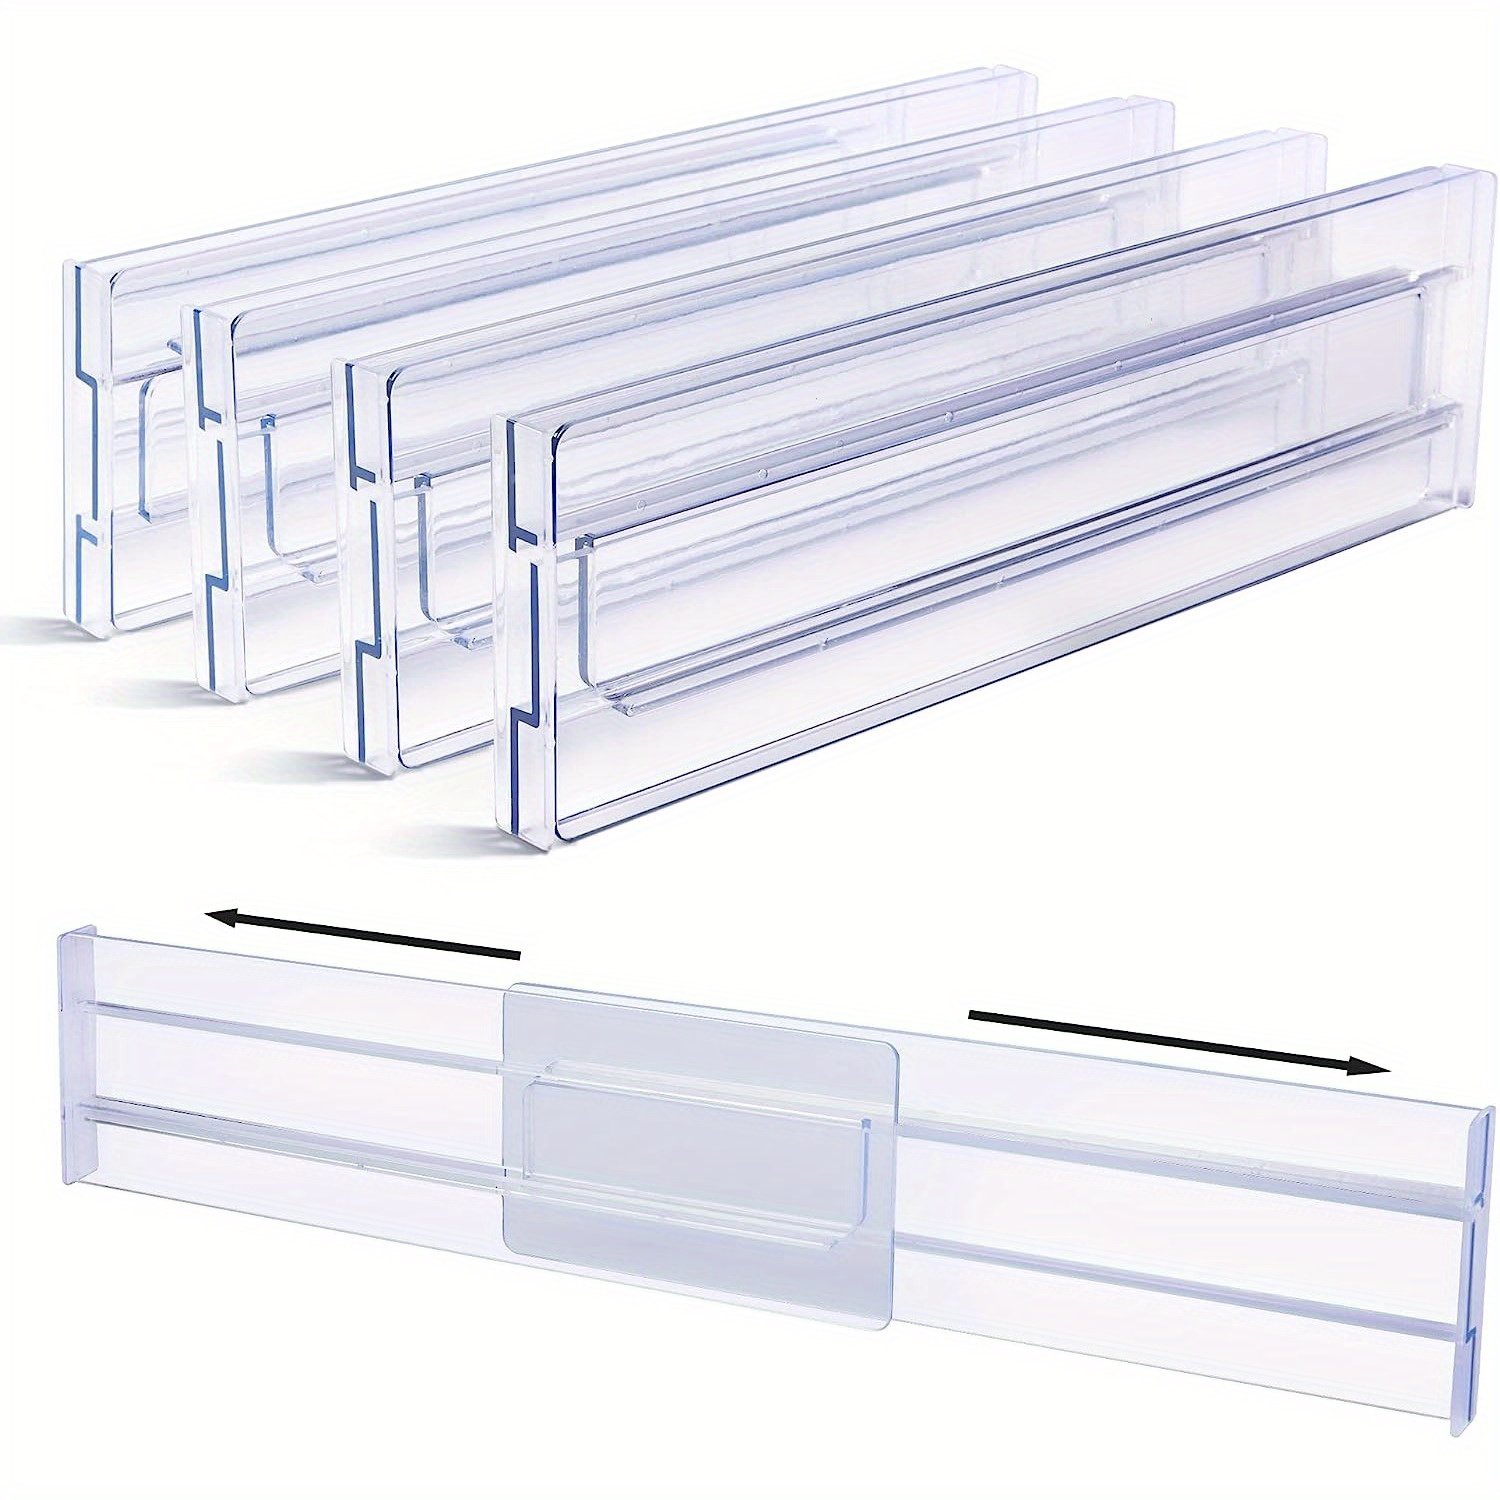 Adjustable Spice Rack, Expandable Plastic Tray Drawer Organizer 12